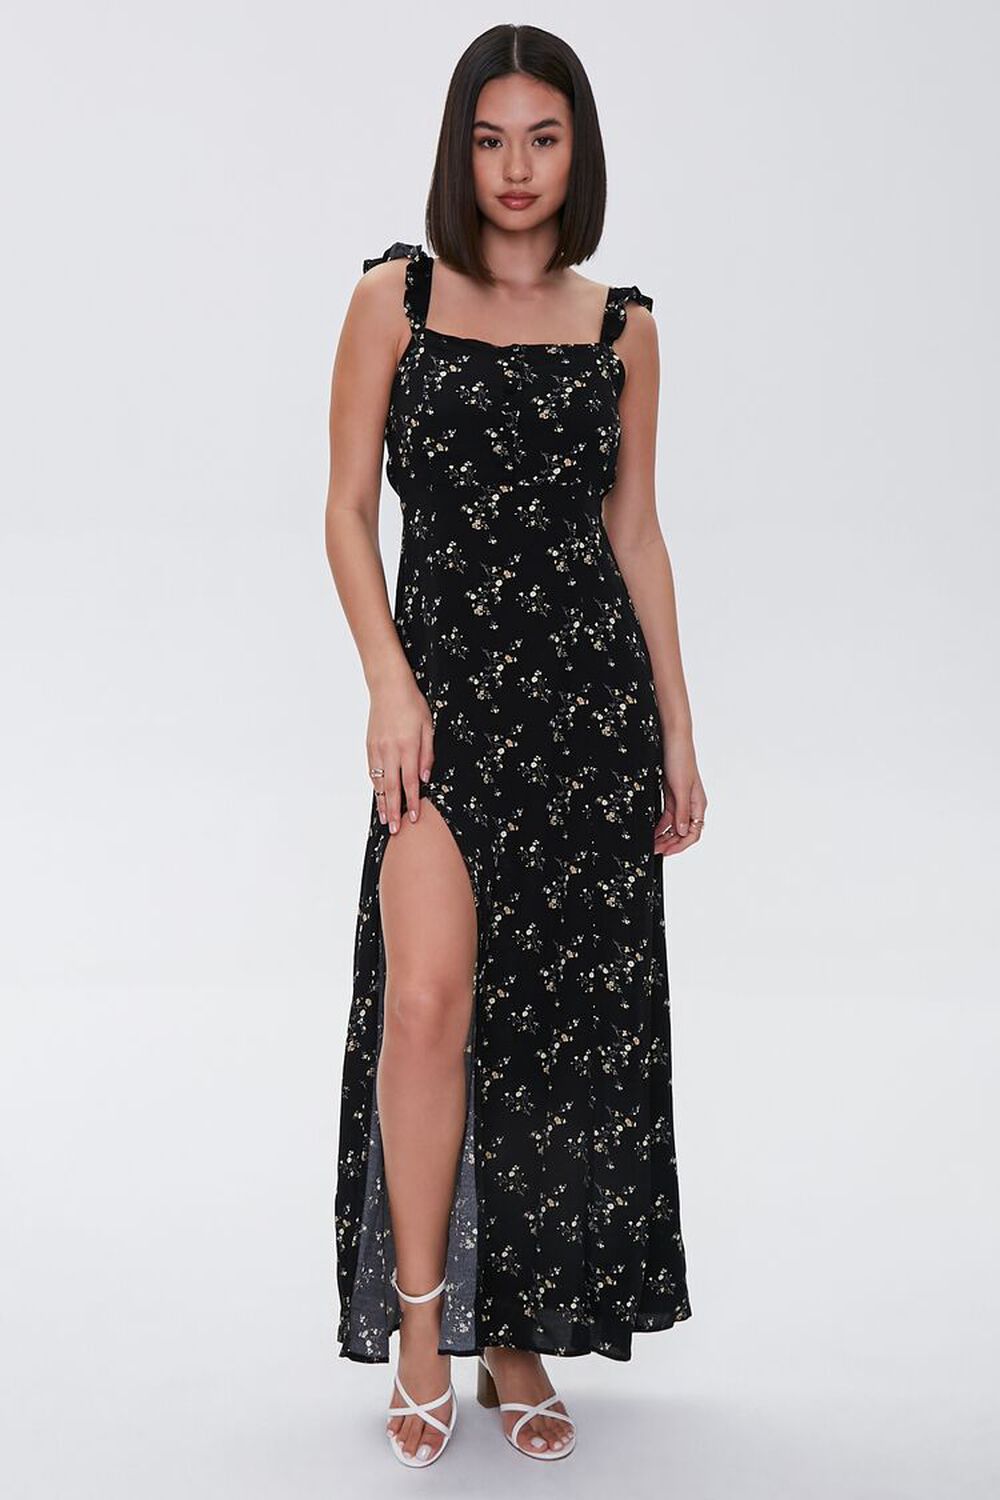 BLACK/MULTI Floral Maxi Dress, image 1